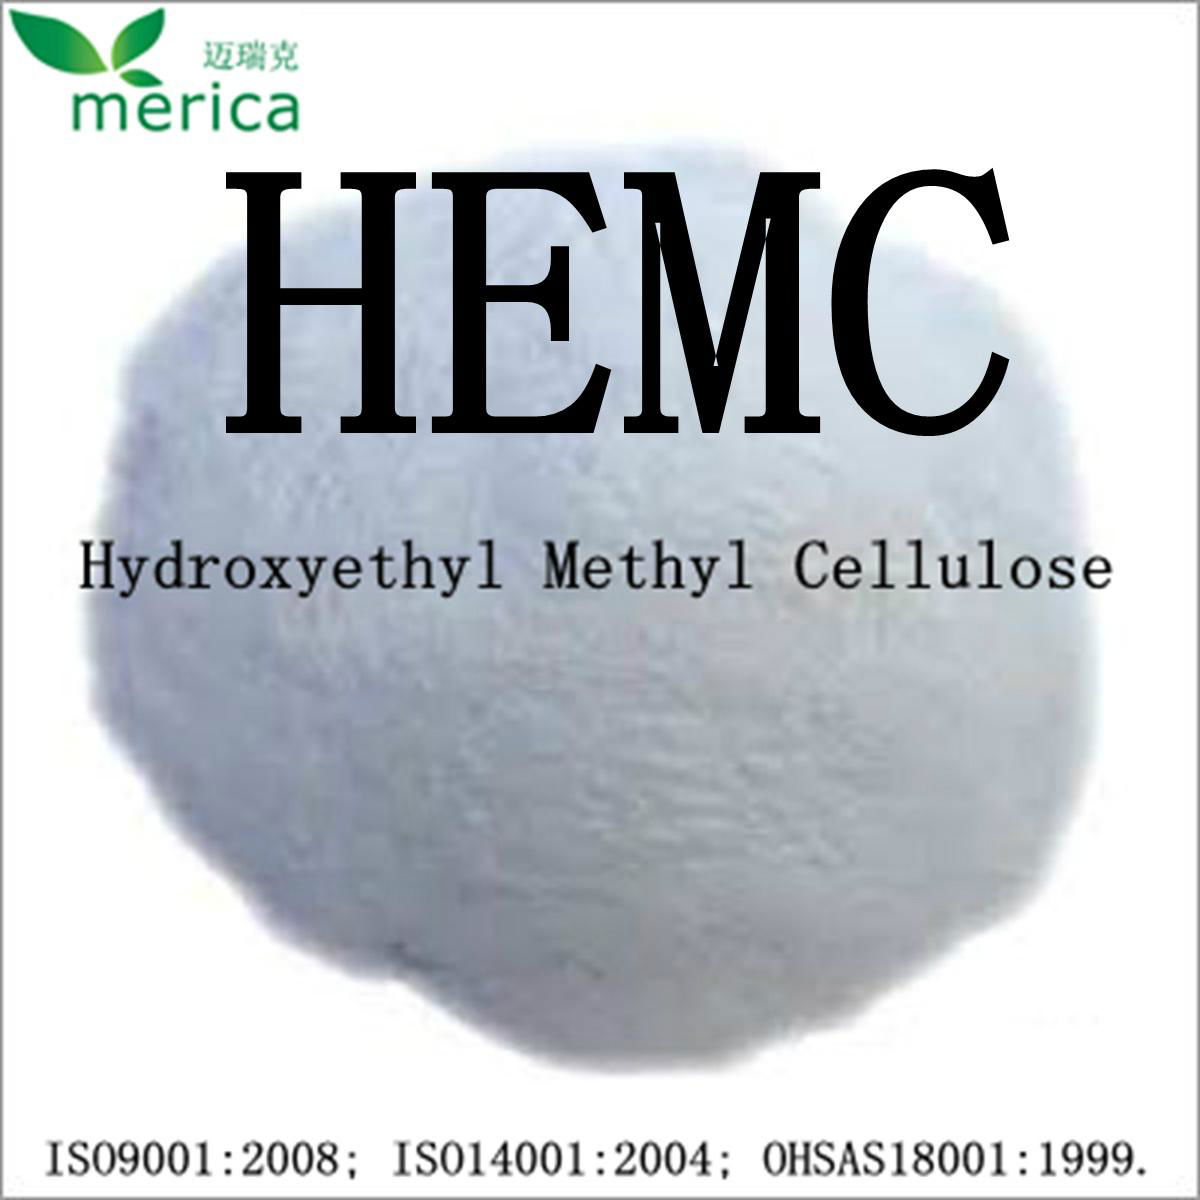 Hydroxyethyl Methyl Cellulose